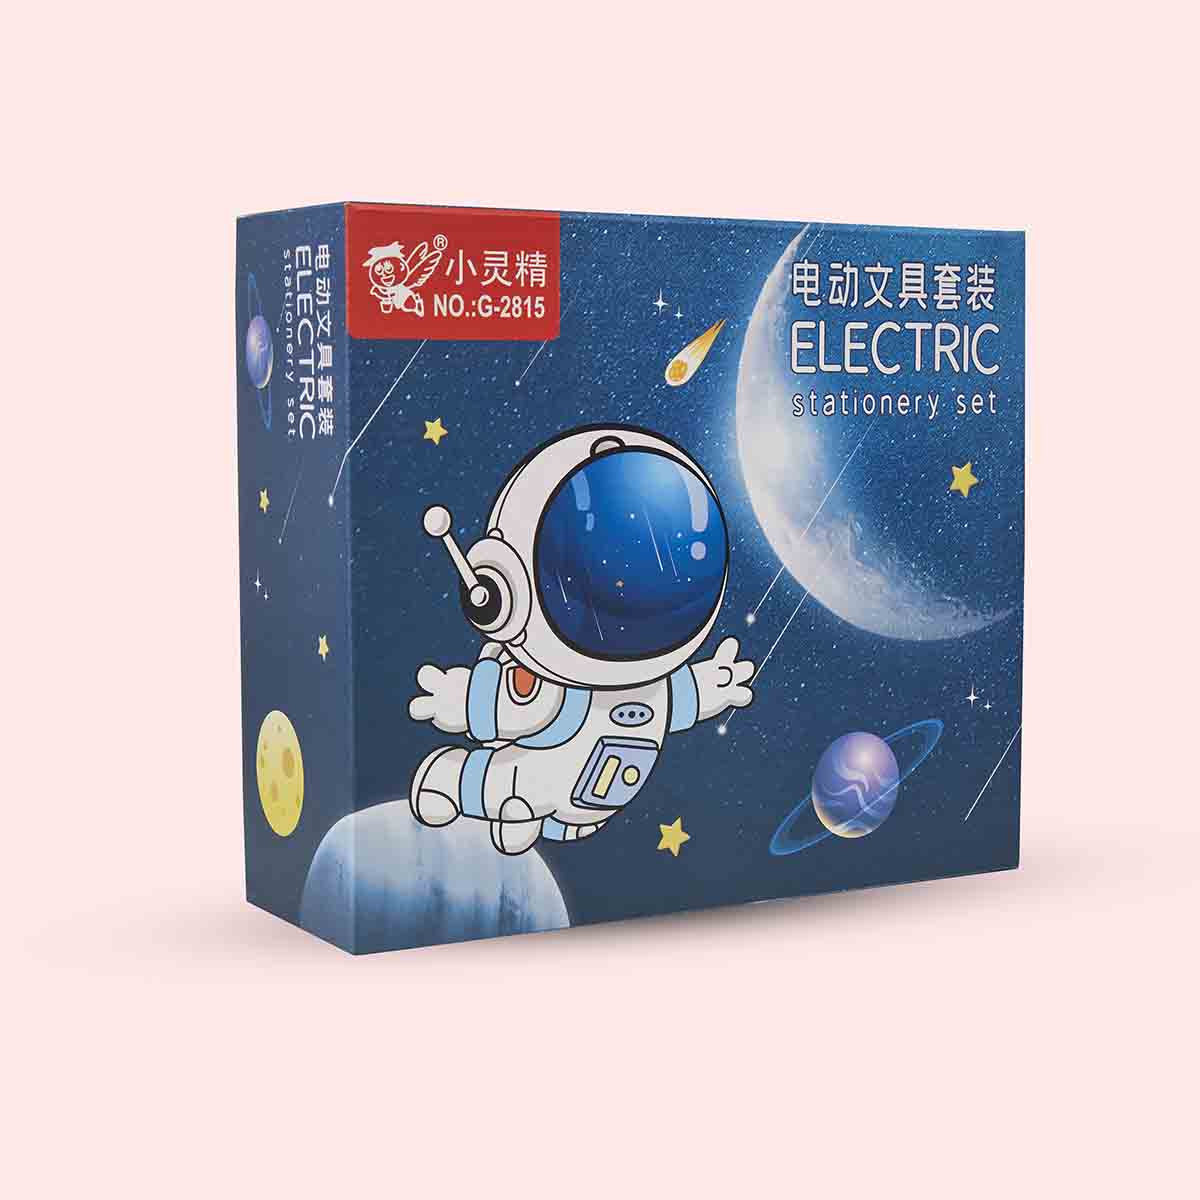 ElectraWrite: Electric Stationery Gift Set - Unicorn